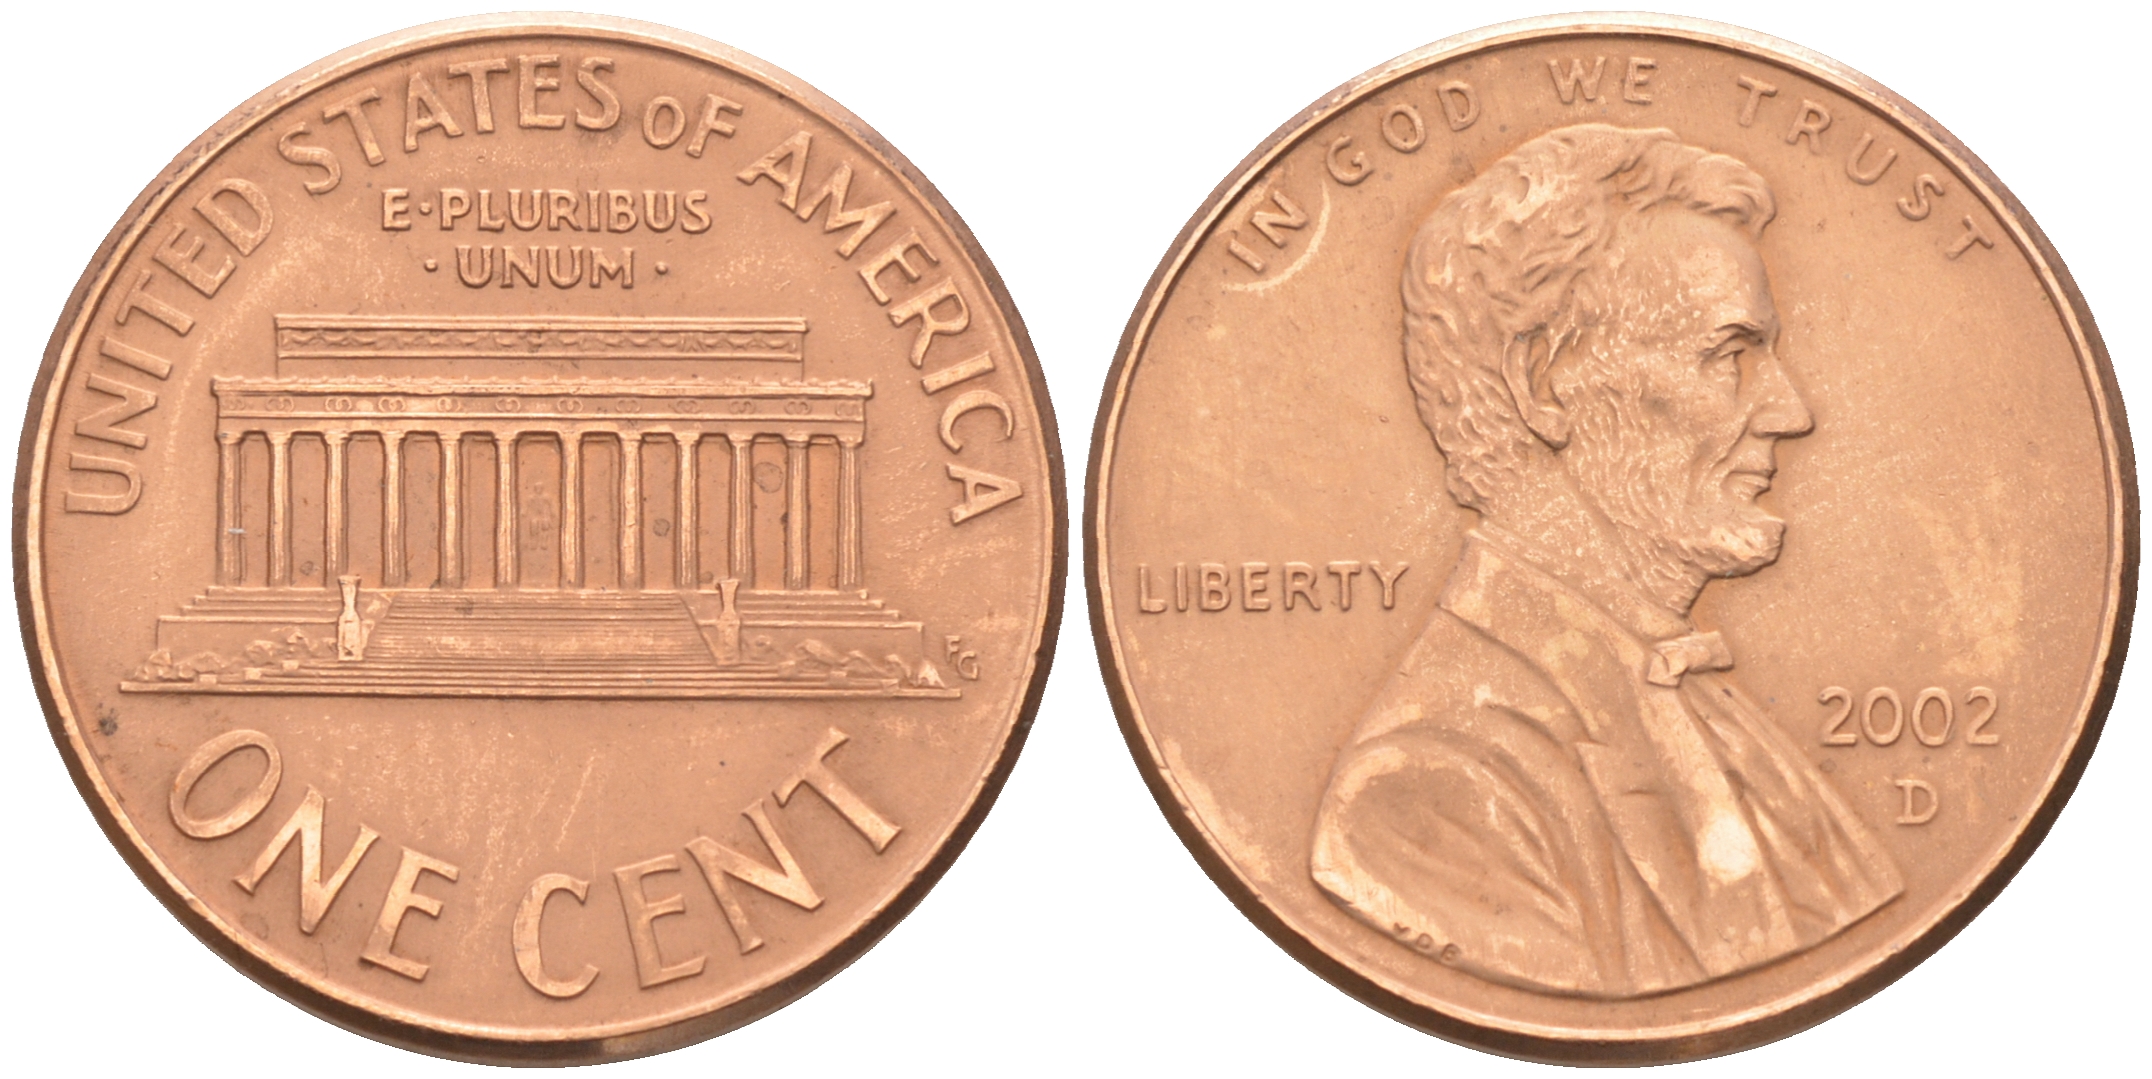 Цент доллара в рублях. 1 Цент США 1942 года. США 1 цент 2002 d. США 1 цент 2002 p.